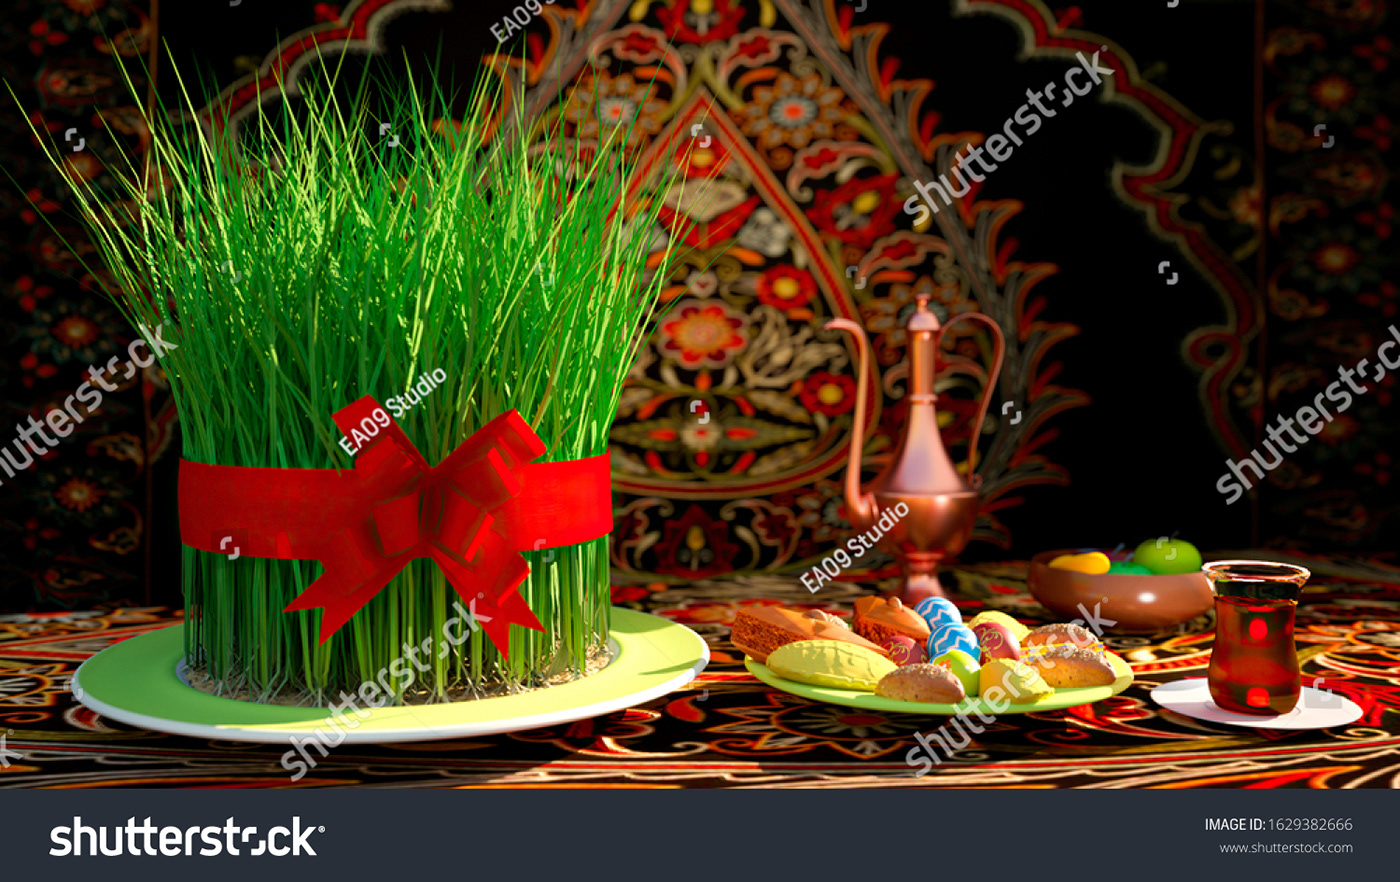 3D Novruz semeni cersenbe bahar bayram semeni 3d azerbaijan Azerbaycan